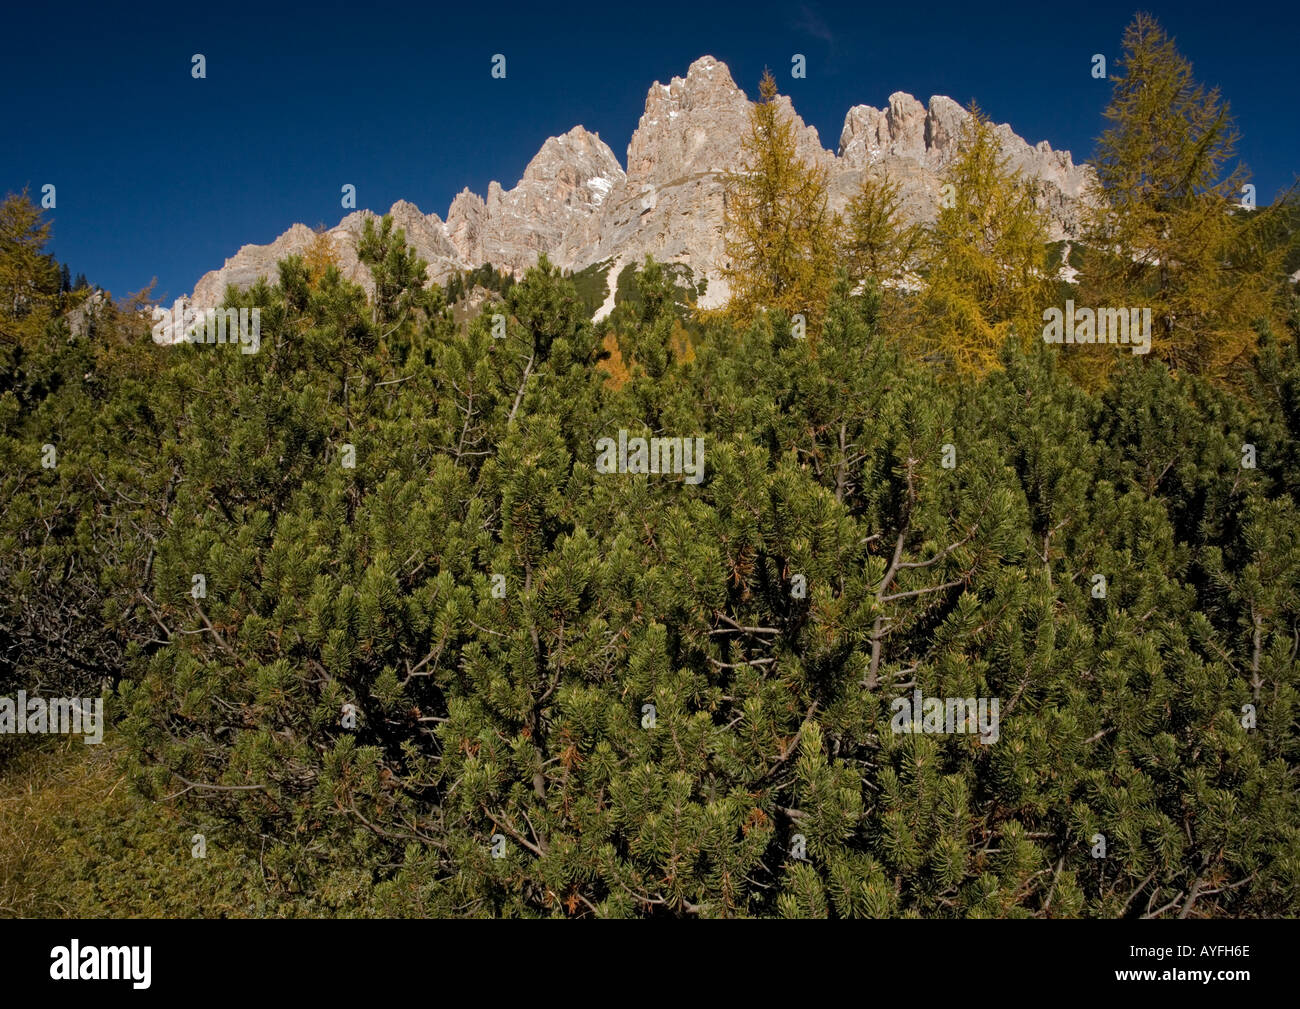 Dwarf high altitude vegetation on the slopes of Mt Cristallo. Includes dwarf pine Pinus mugo and common larch Larix decidua. Ita Stock Photo